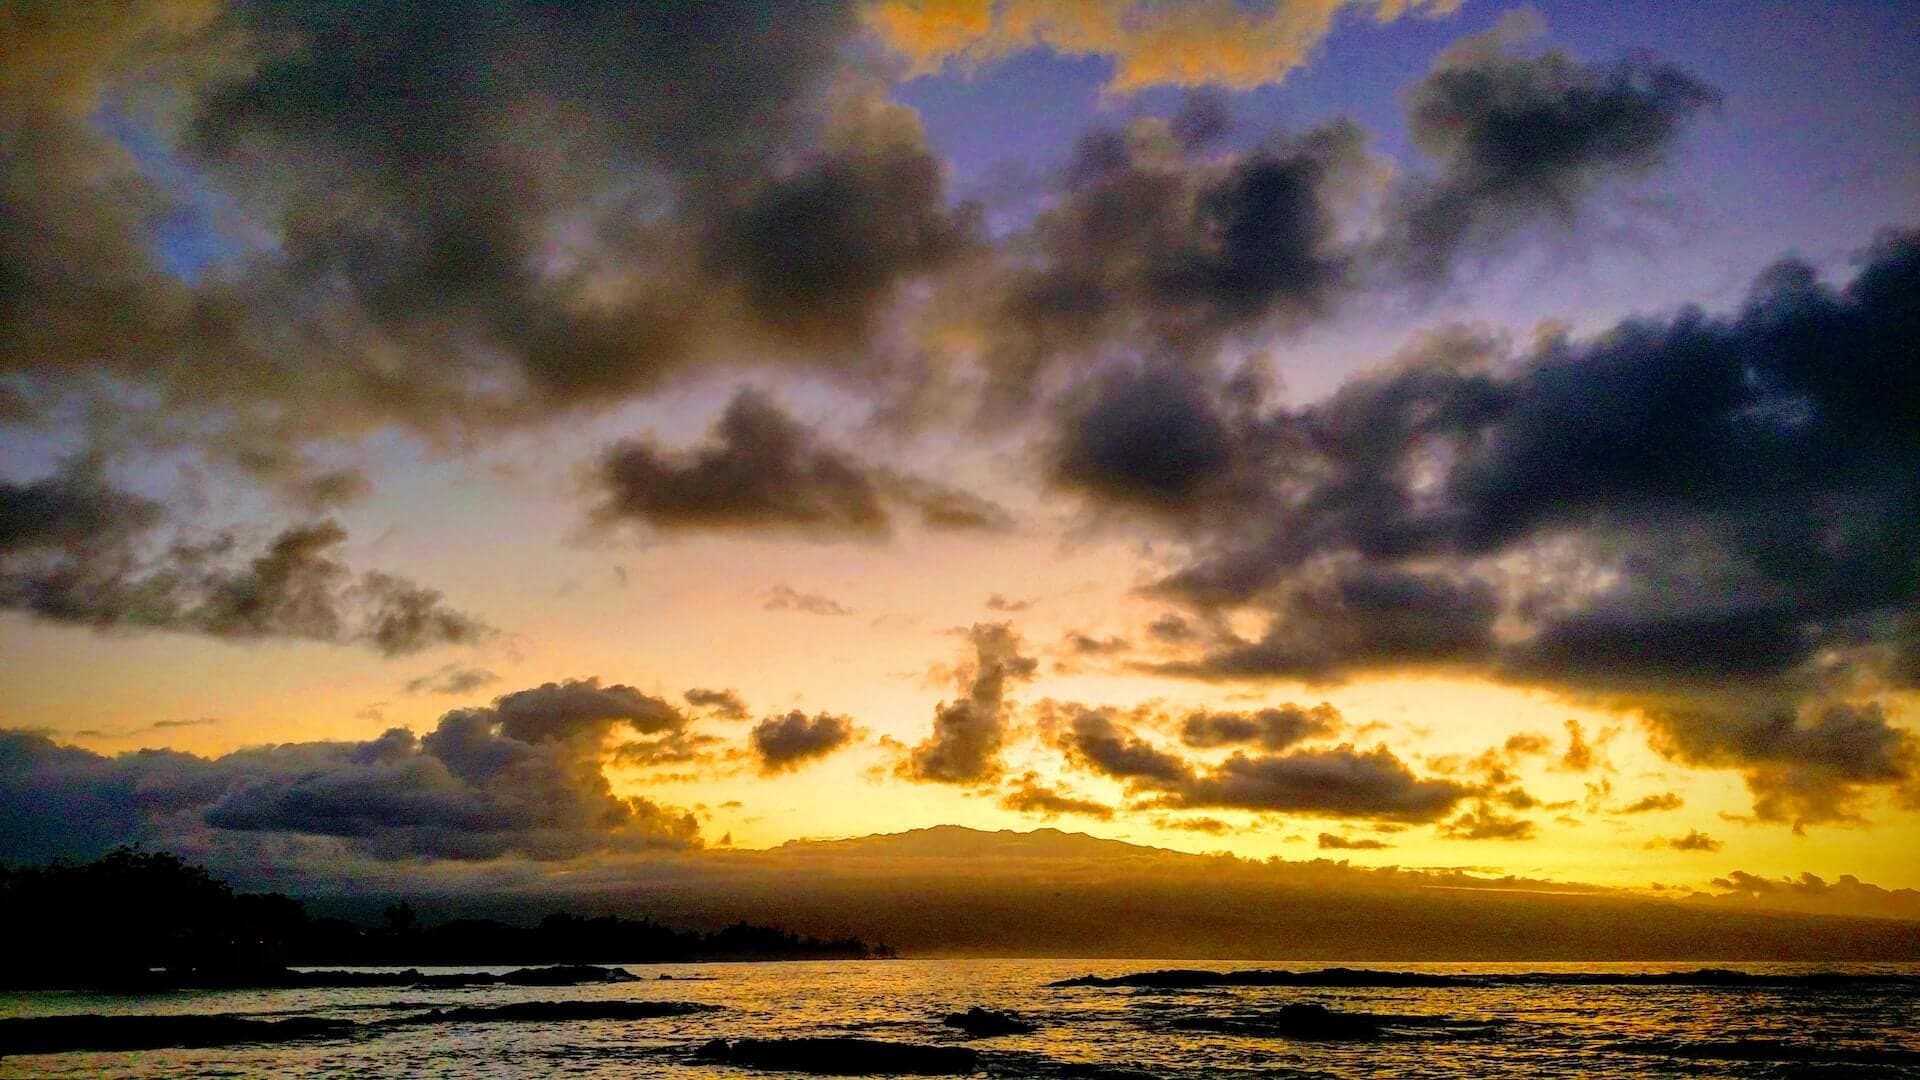 Leleiwi Point in Hilo Hawaii